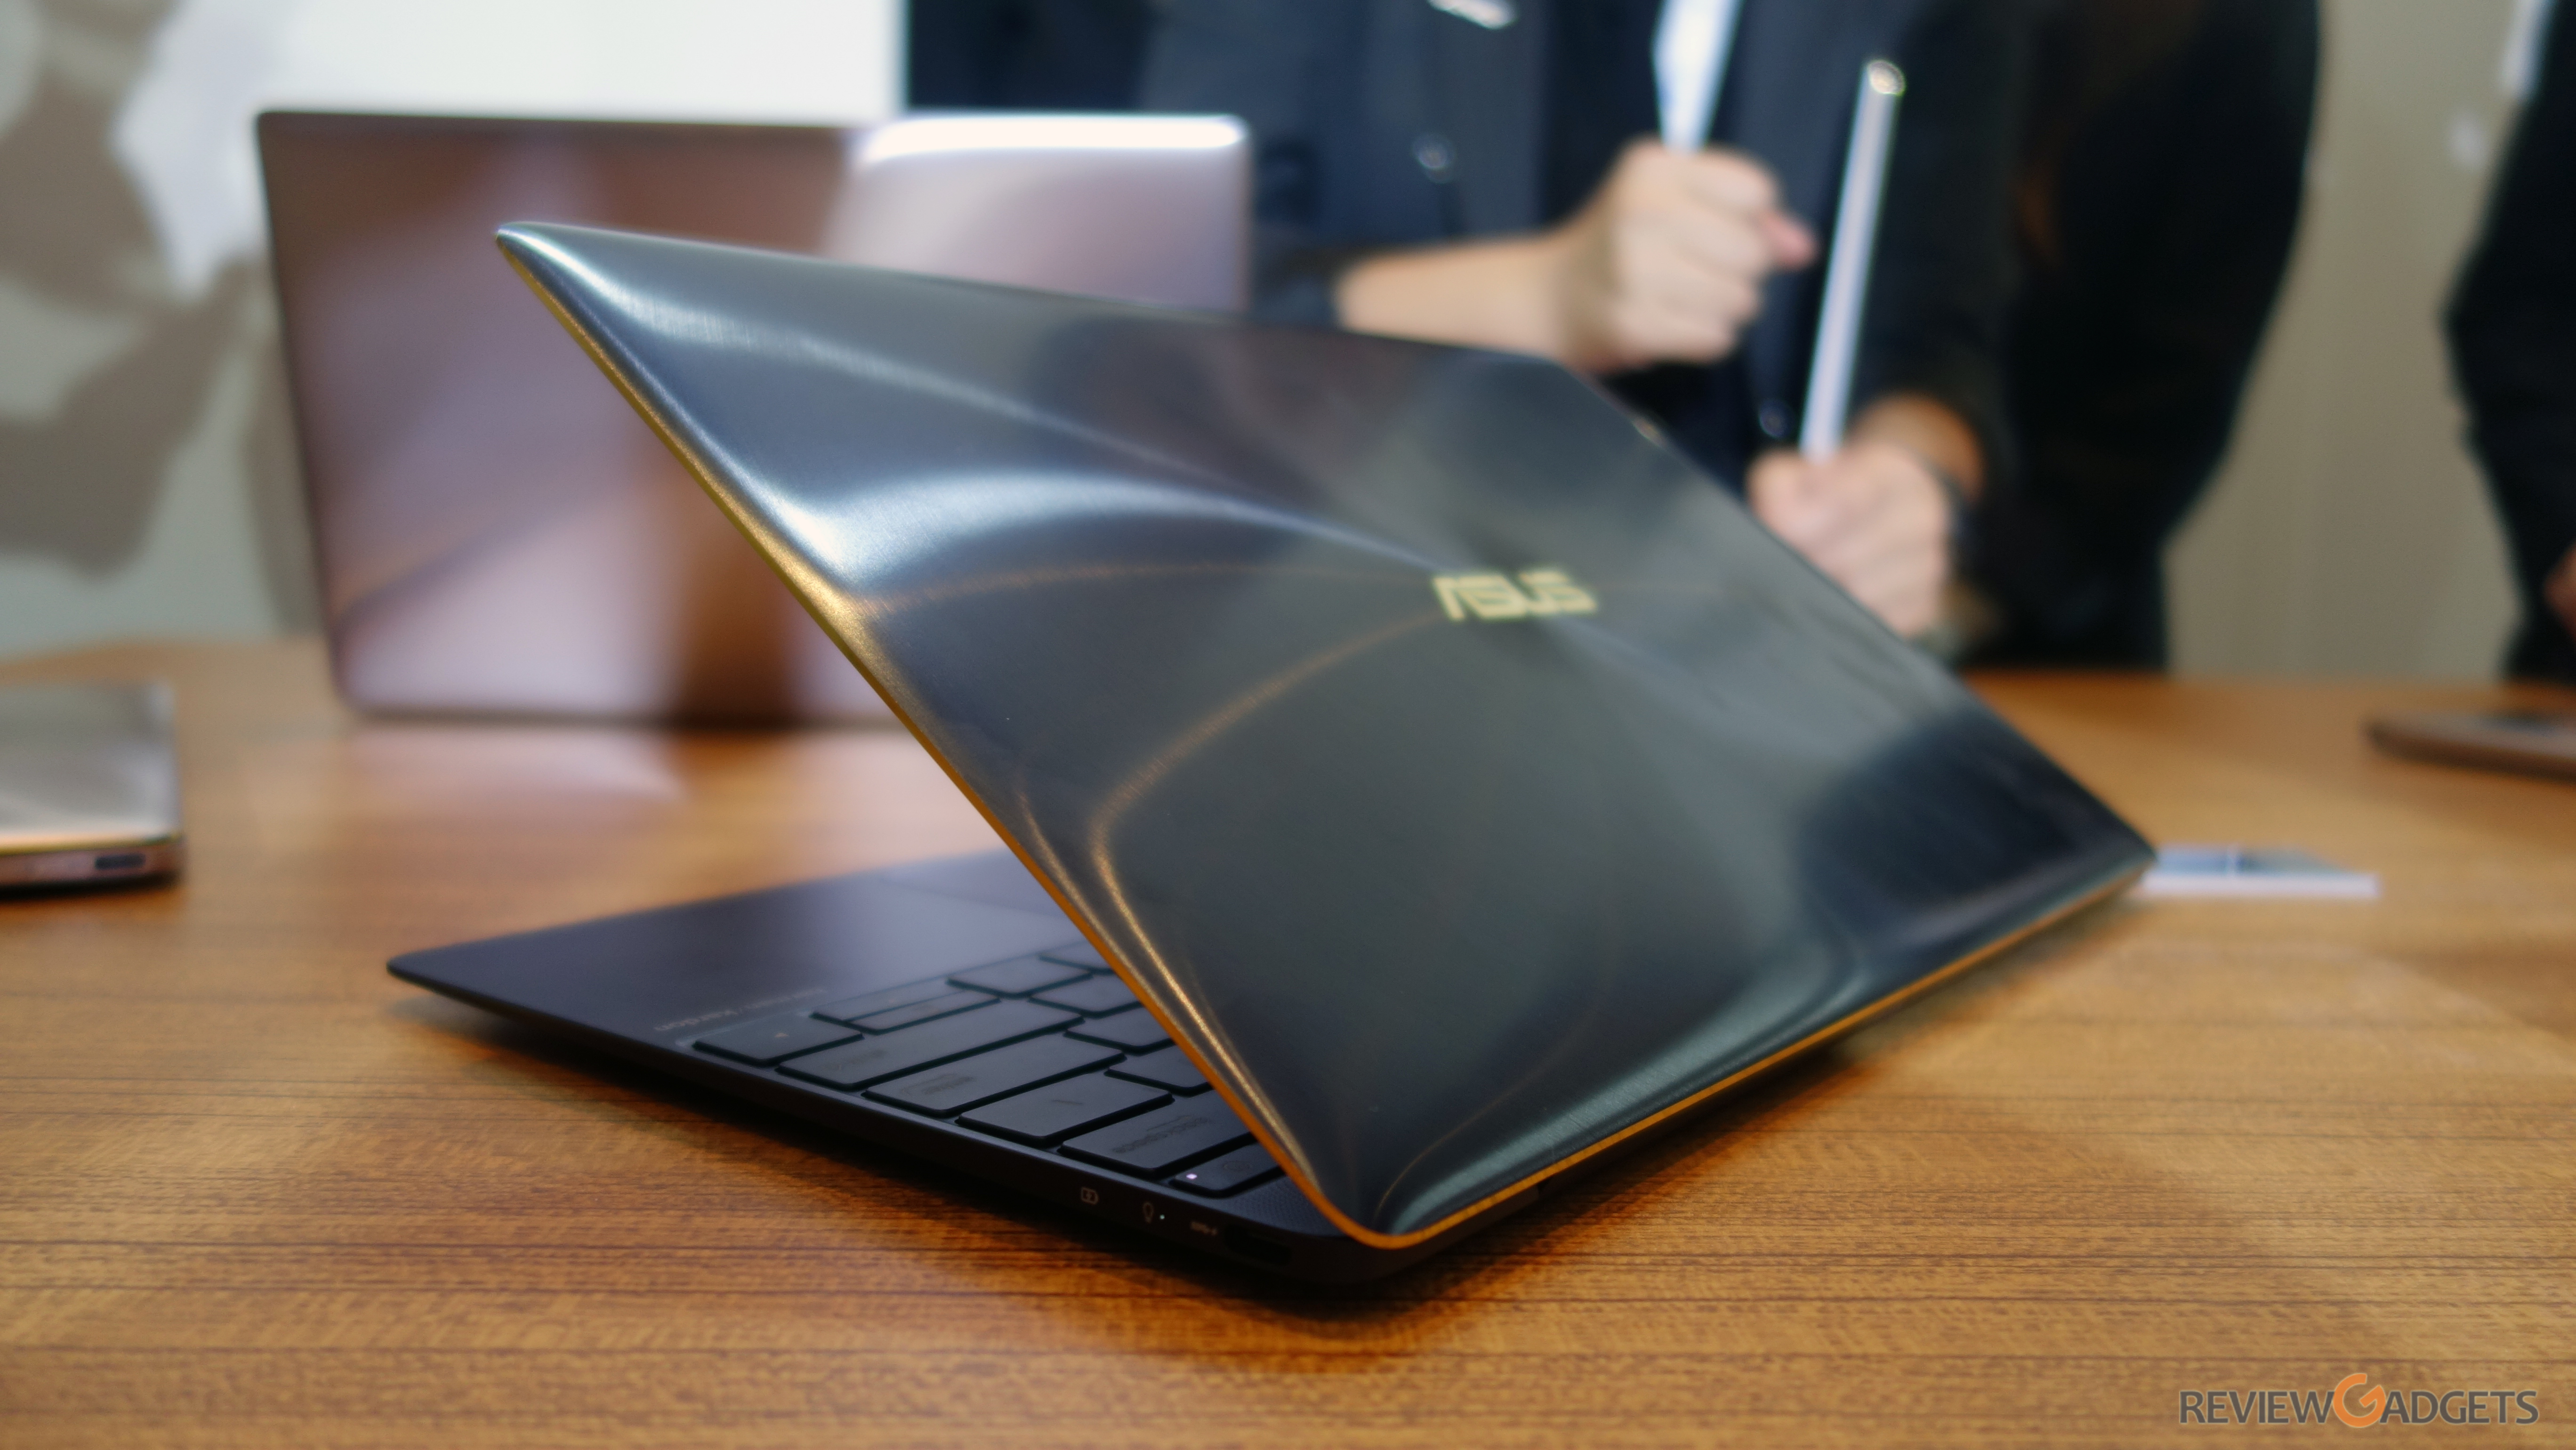 ASUS ZenBook 3 laptop: First Impression